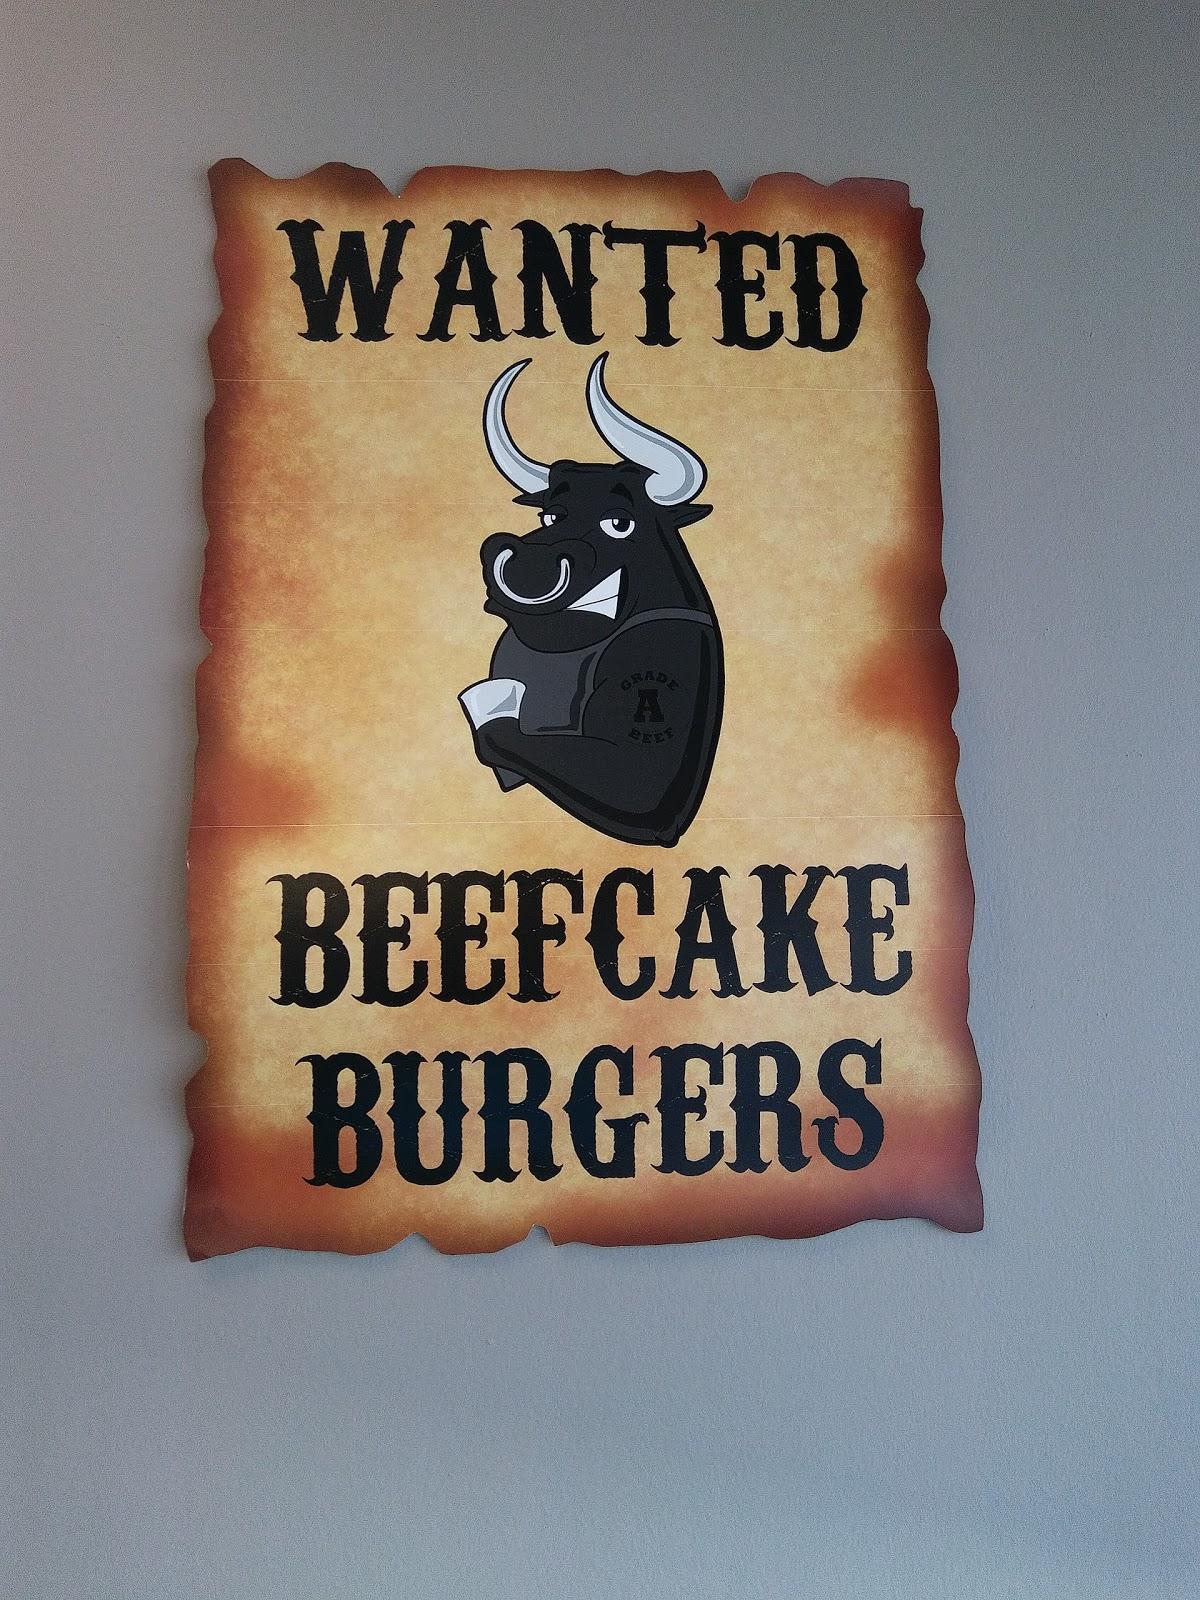 Beefcake burgers menu